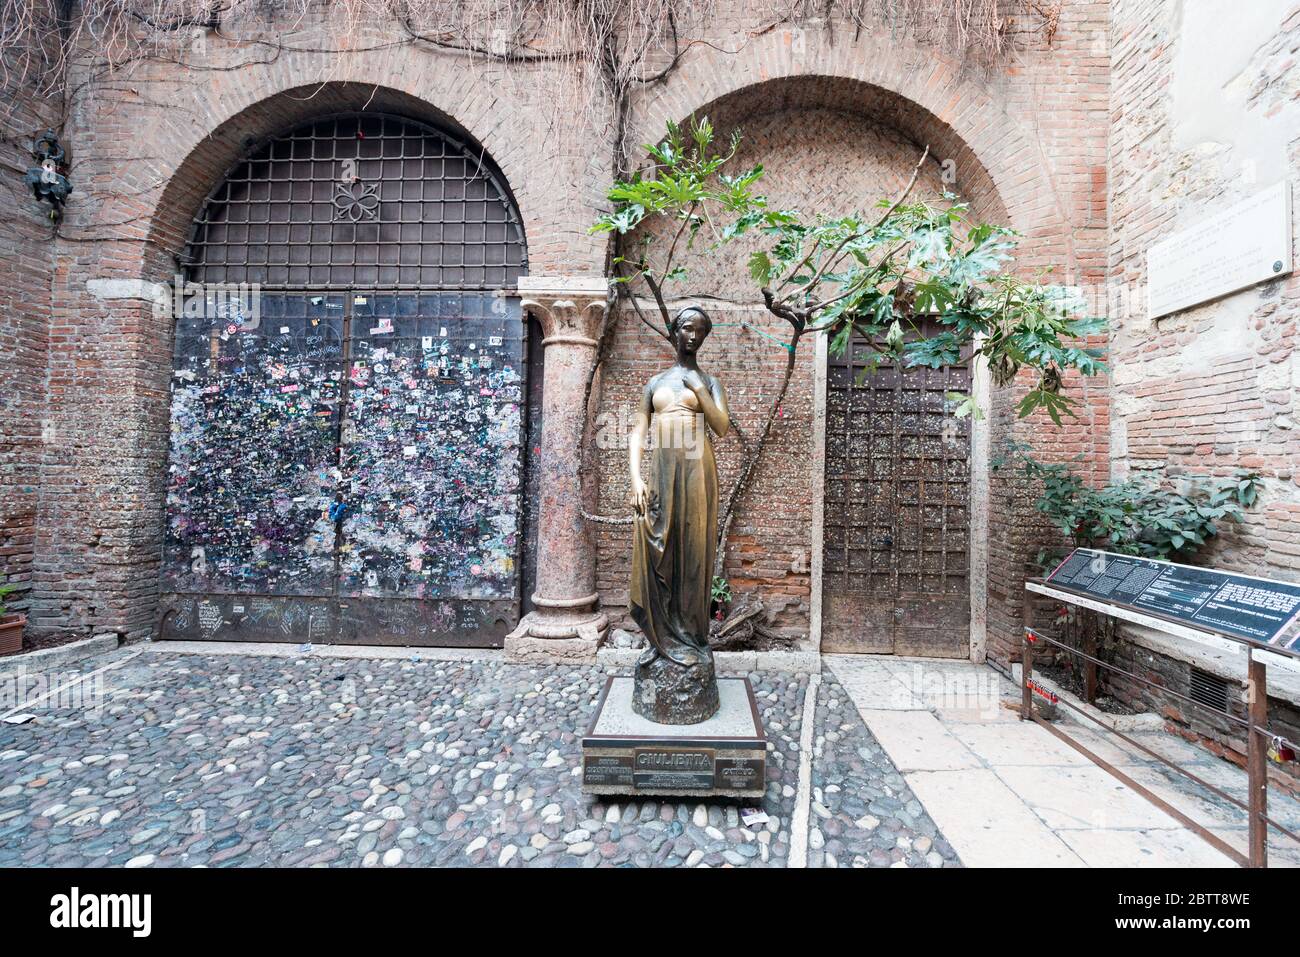 VERONA, ITALIA - 14, MARZO de 2018: Imagen horizontal de la estatua de bronce de Julieta, un famoso paseo turístico de Verona, Italia Foto de stock